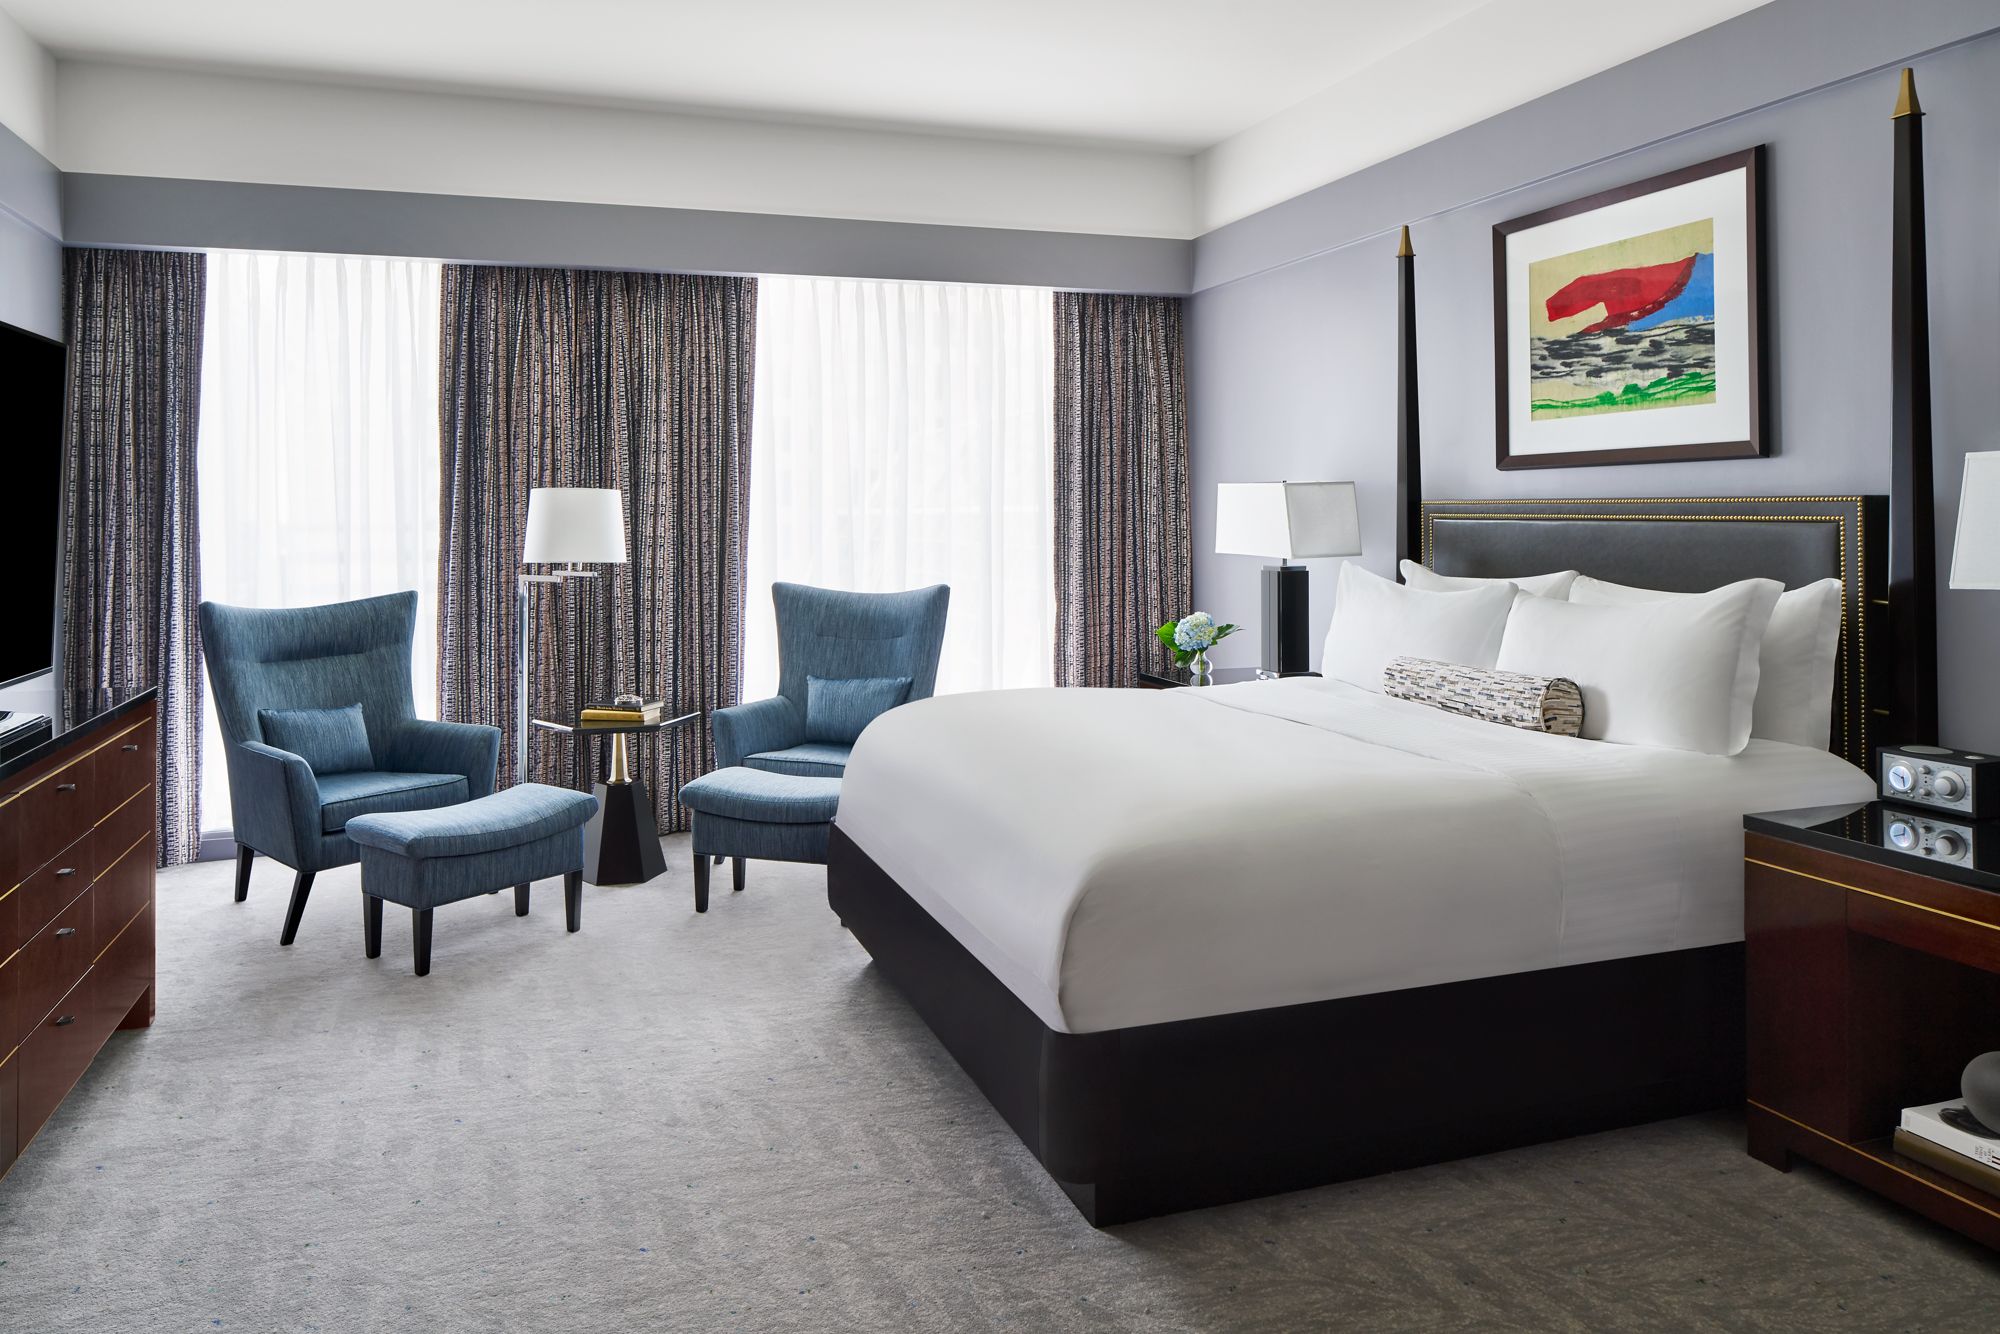 2 Bedroom Suites In Charlotte Nc / Hotel Rooms Suites In Uptown Charlotte The Ivey S Hotel